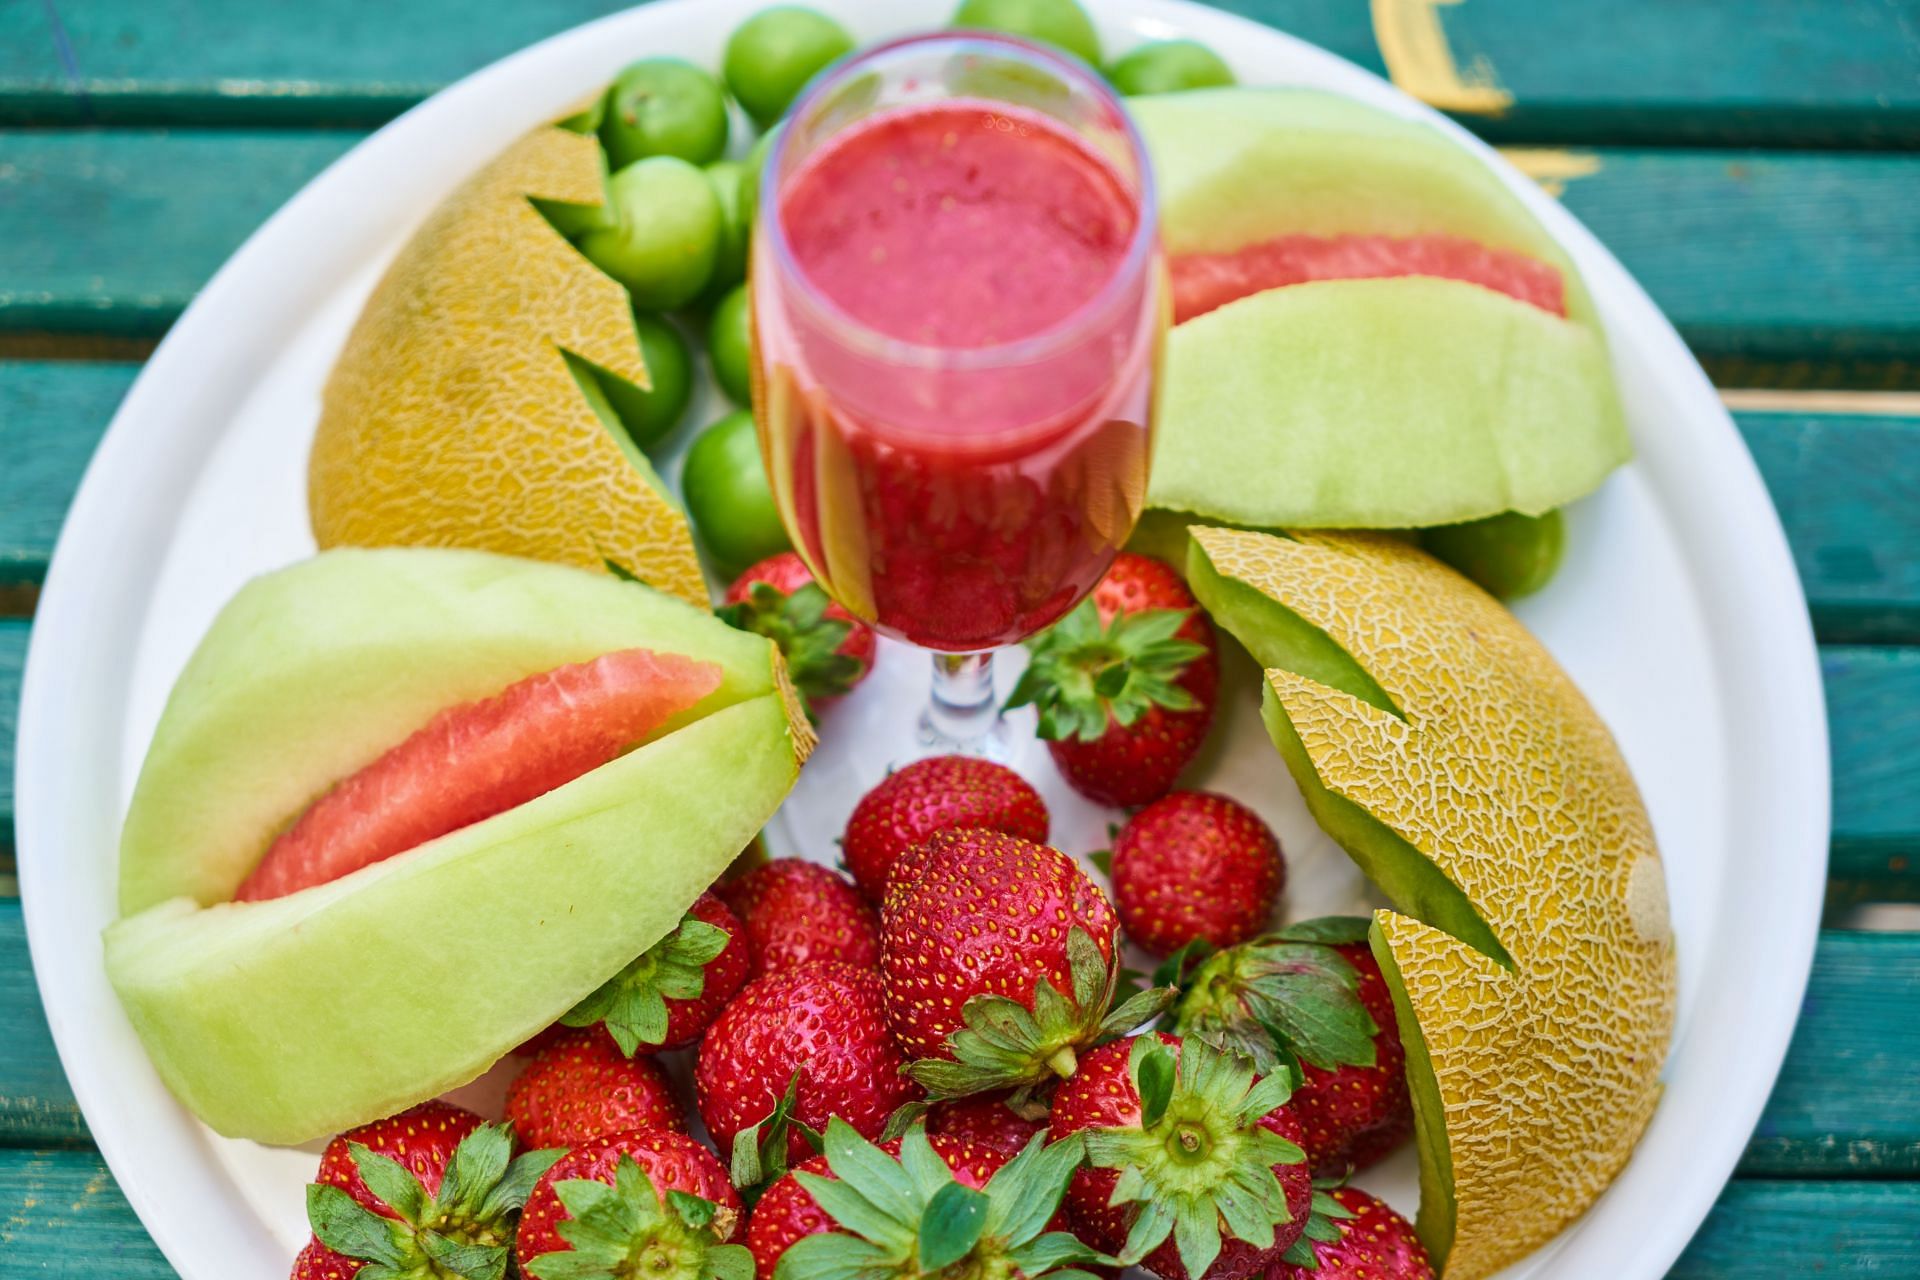 Fruit juices are great for detoxification. (Image via Pexels/Engin Akyrut)